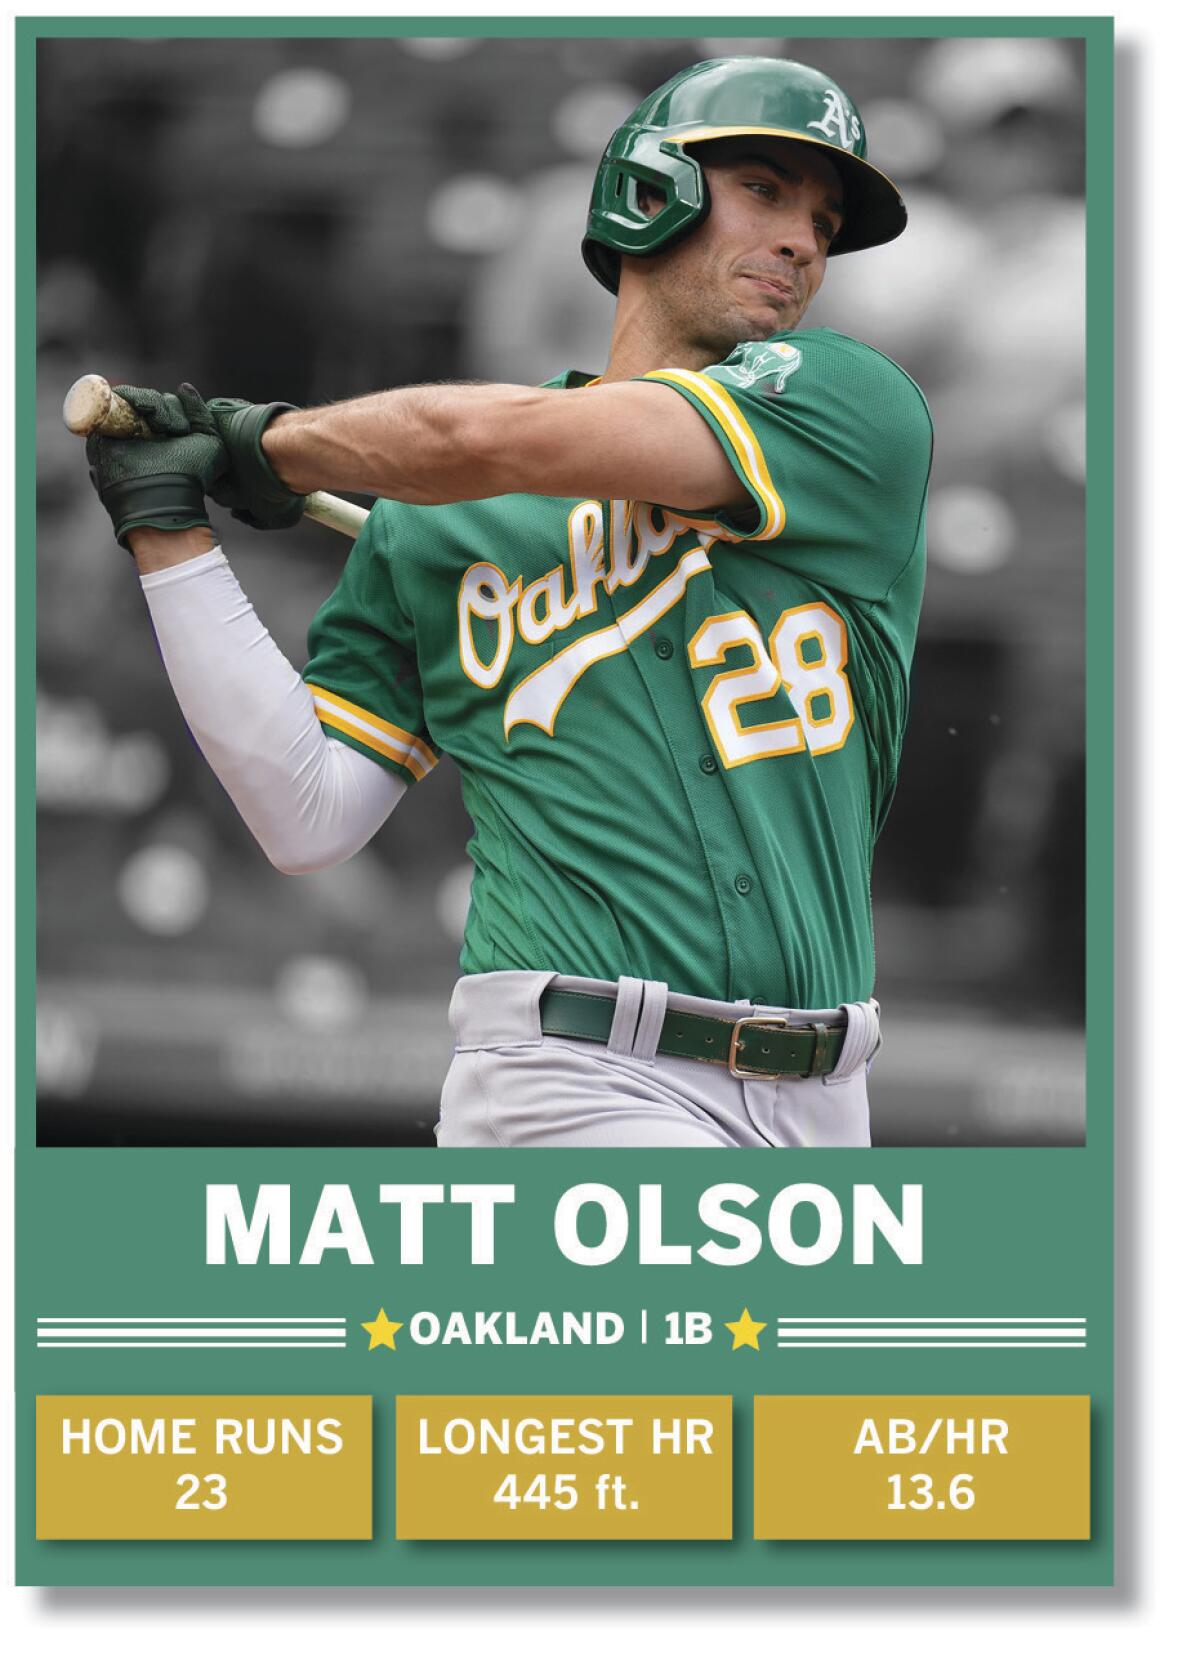 Oakland Athletics home run derby competitor Matt Olson.